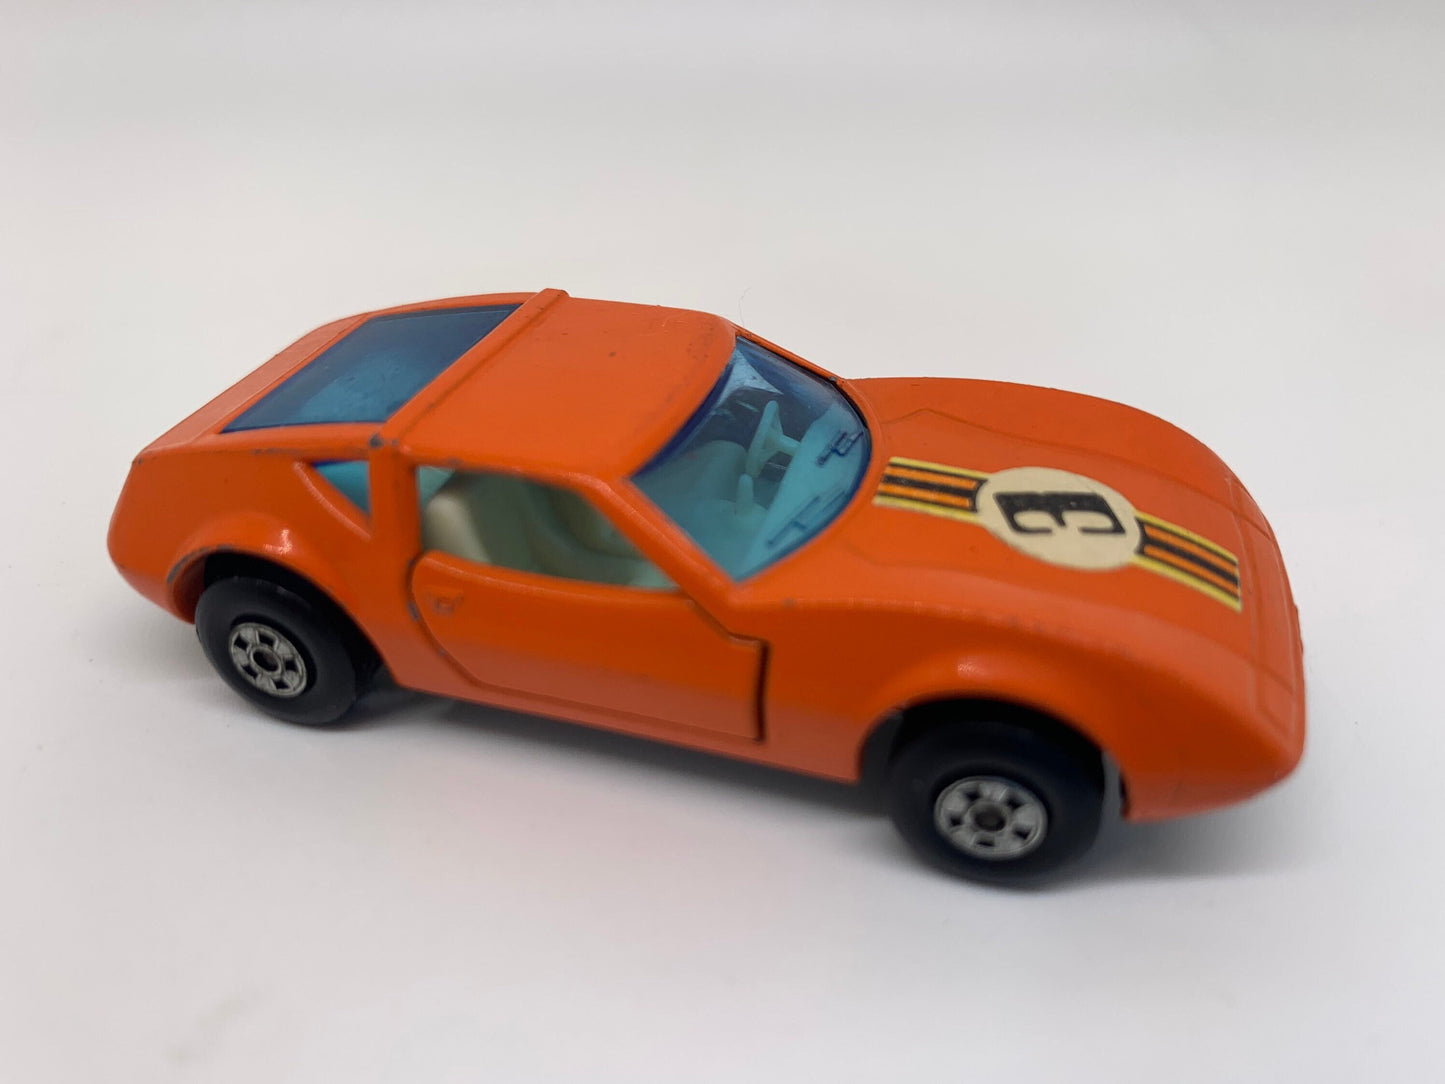 Matchbox Monteverdi Hai Orange Superfast Collectable Miniature Scale Model Toy Car Perfect Birthday Gift